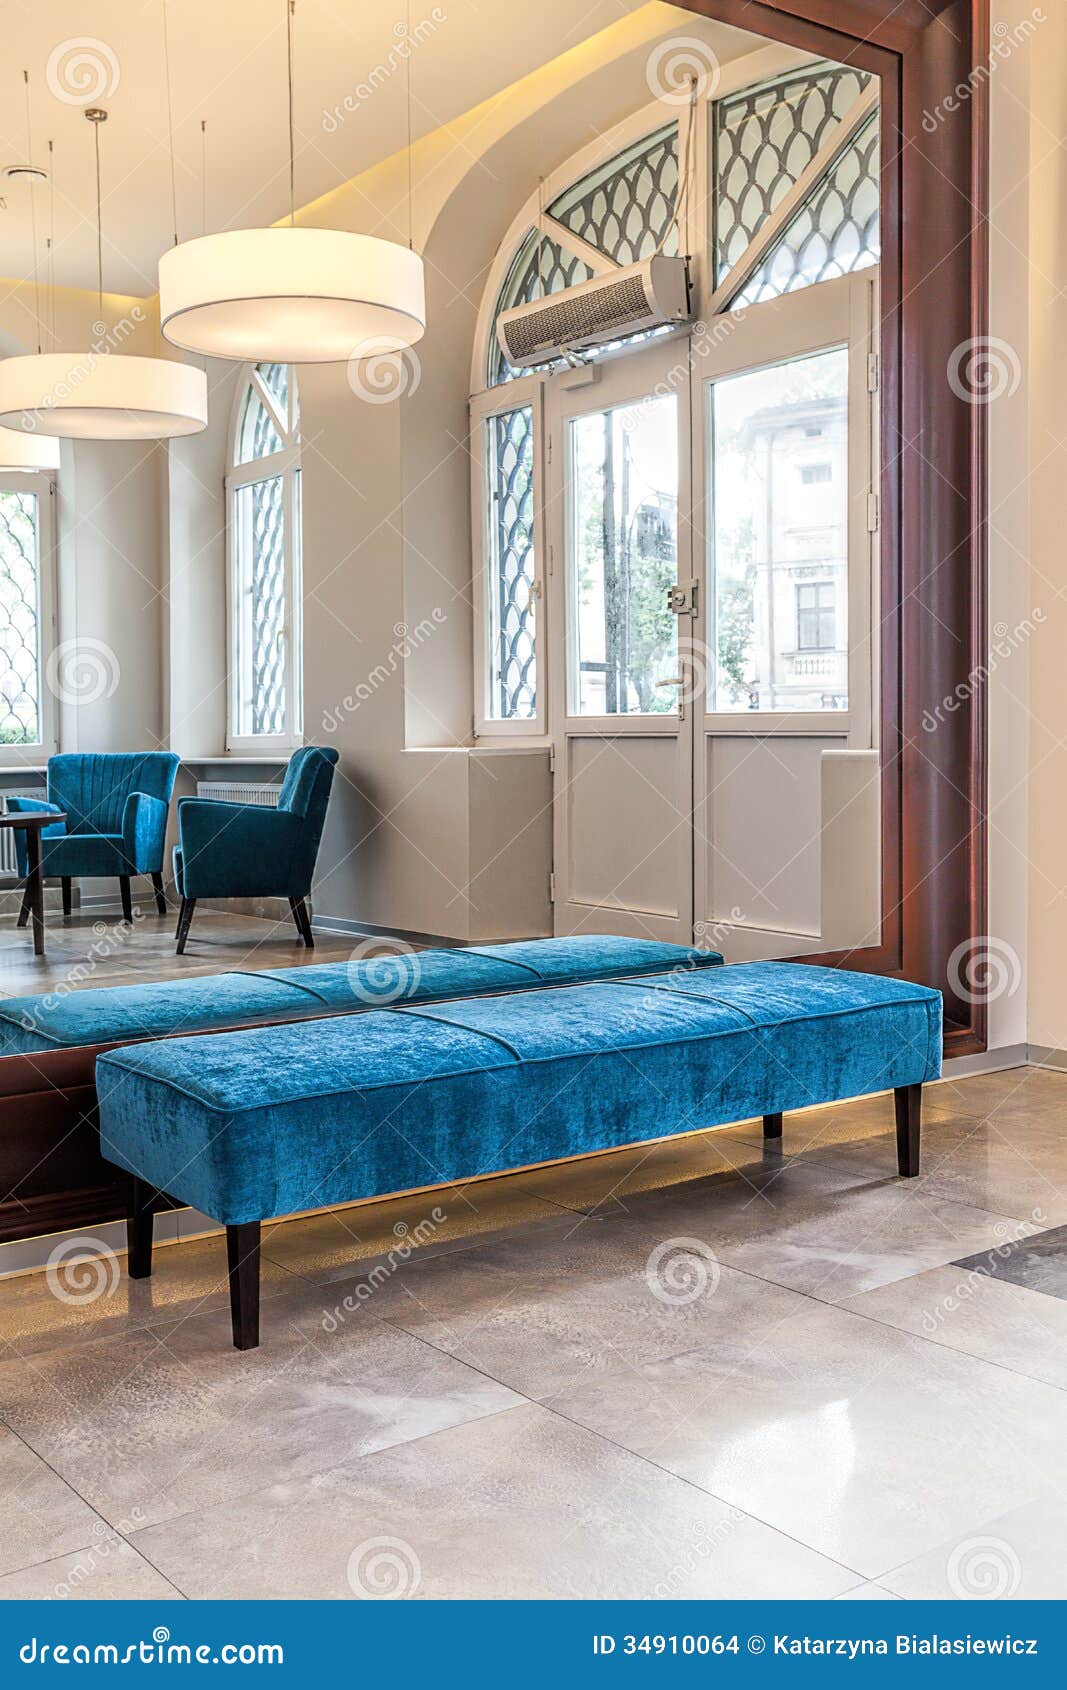 Turquoise Sofa Stock Images - Image: 34910064